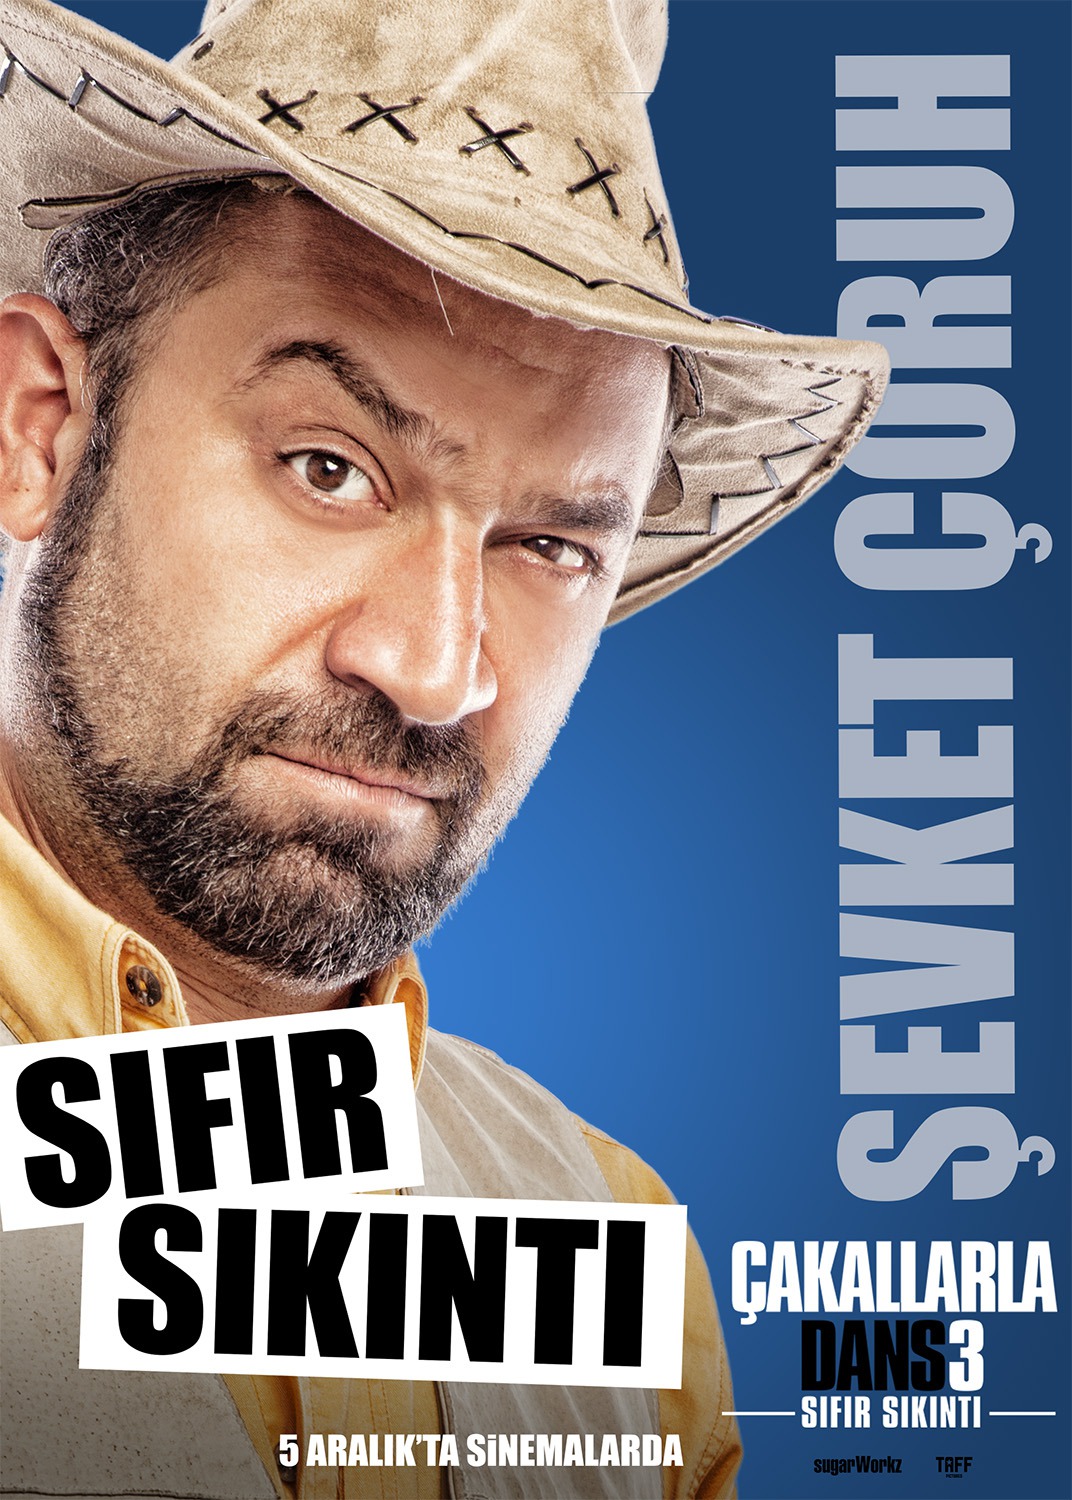 Extra Large Movie Poster Image for Çakallarla Dans 3: Sifir Sikinti (#1 of 9)